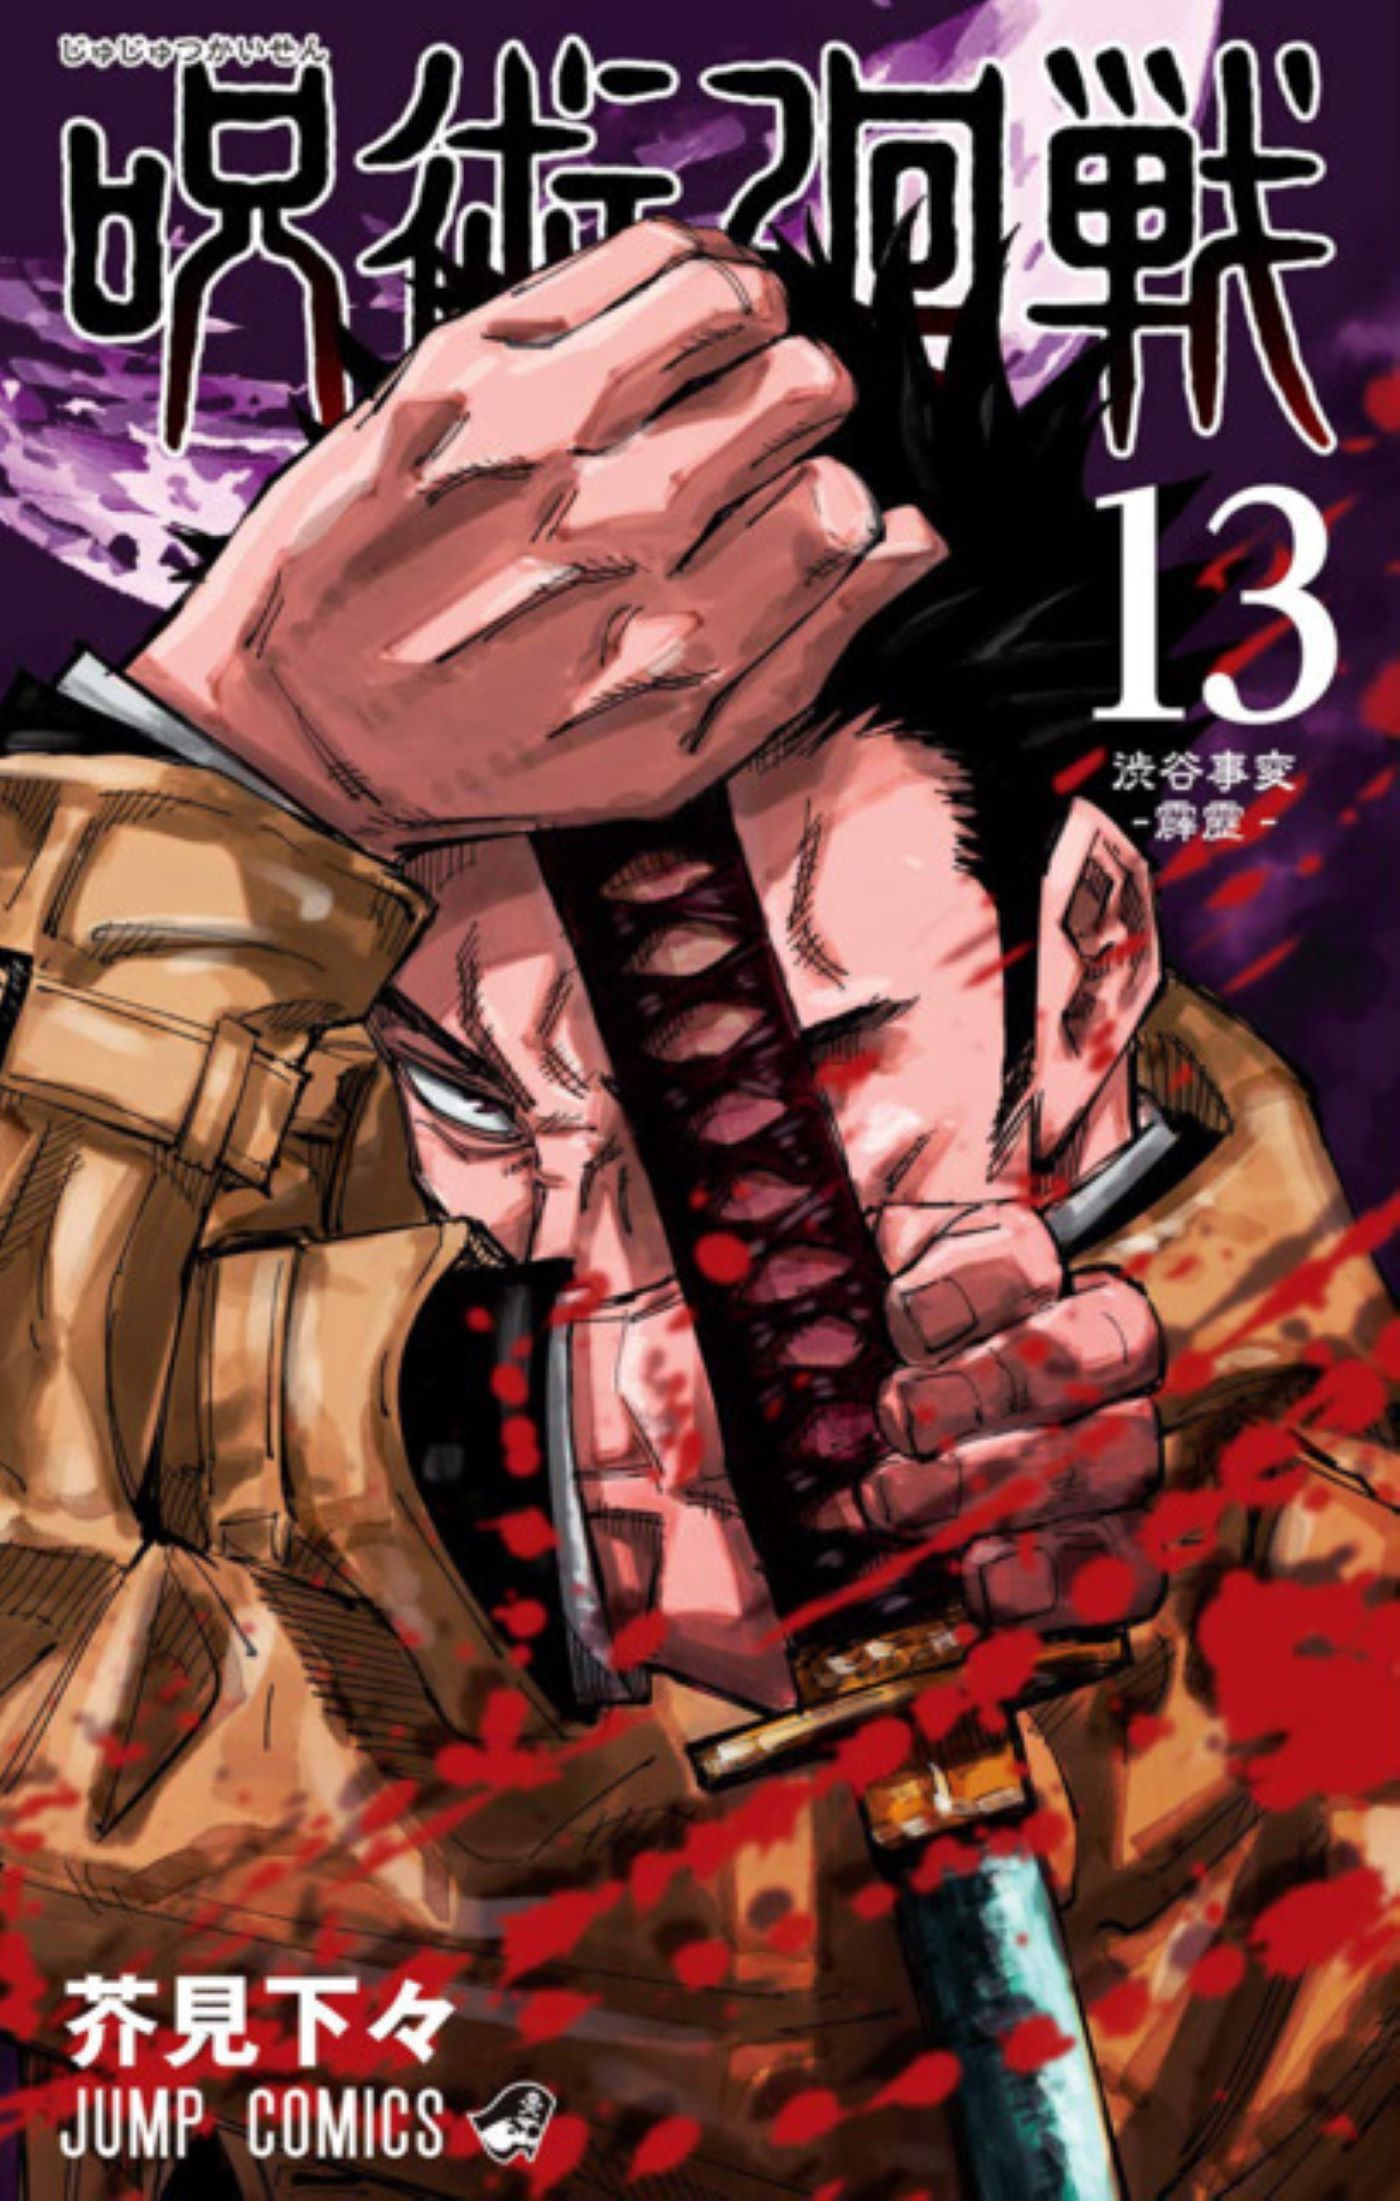 Jujutsu Kaisen Cover #13 - Kusakabe holding katana in front of face ready to battle